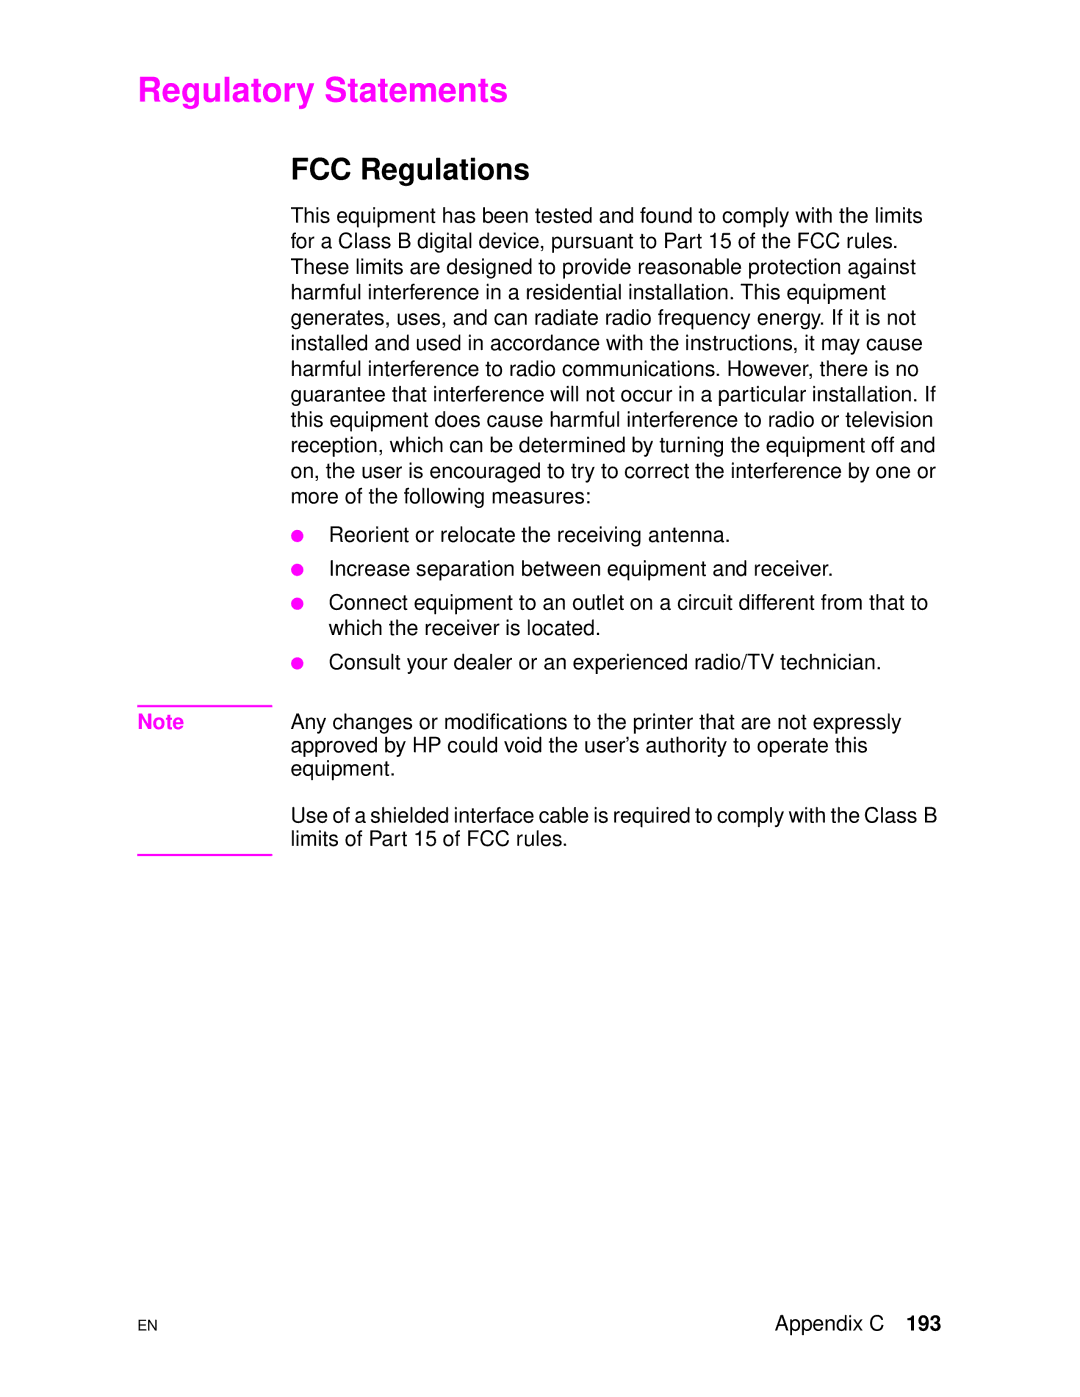 HP 4500DN manual Regulatory Statements, FCC Regulations 